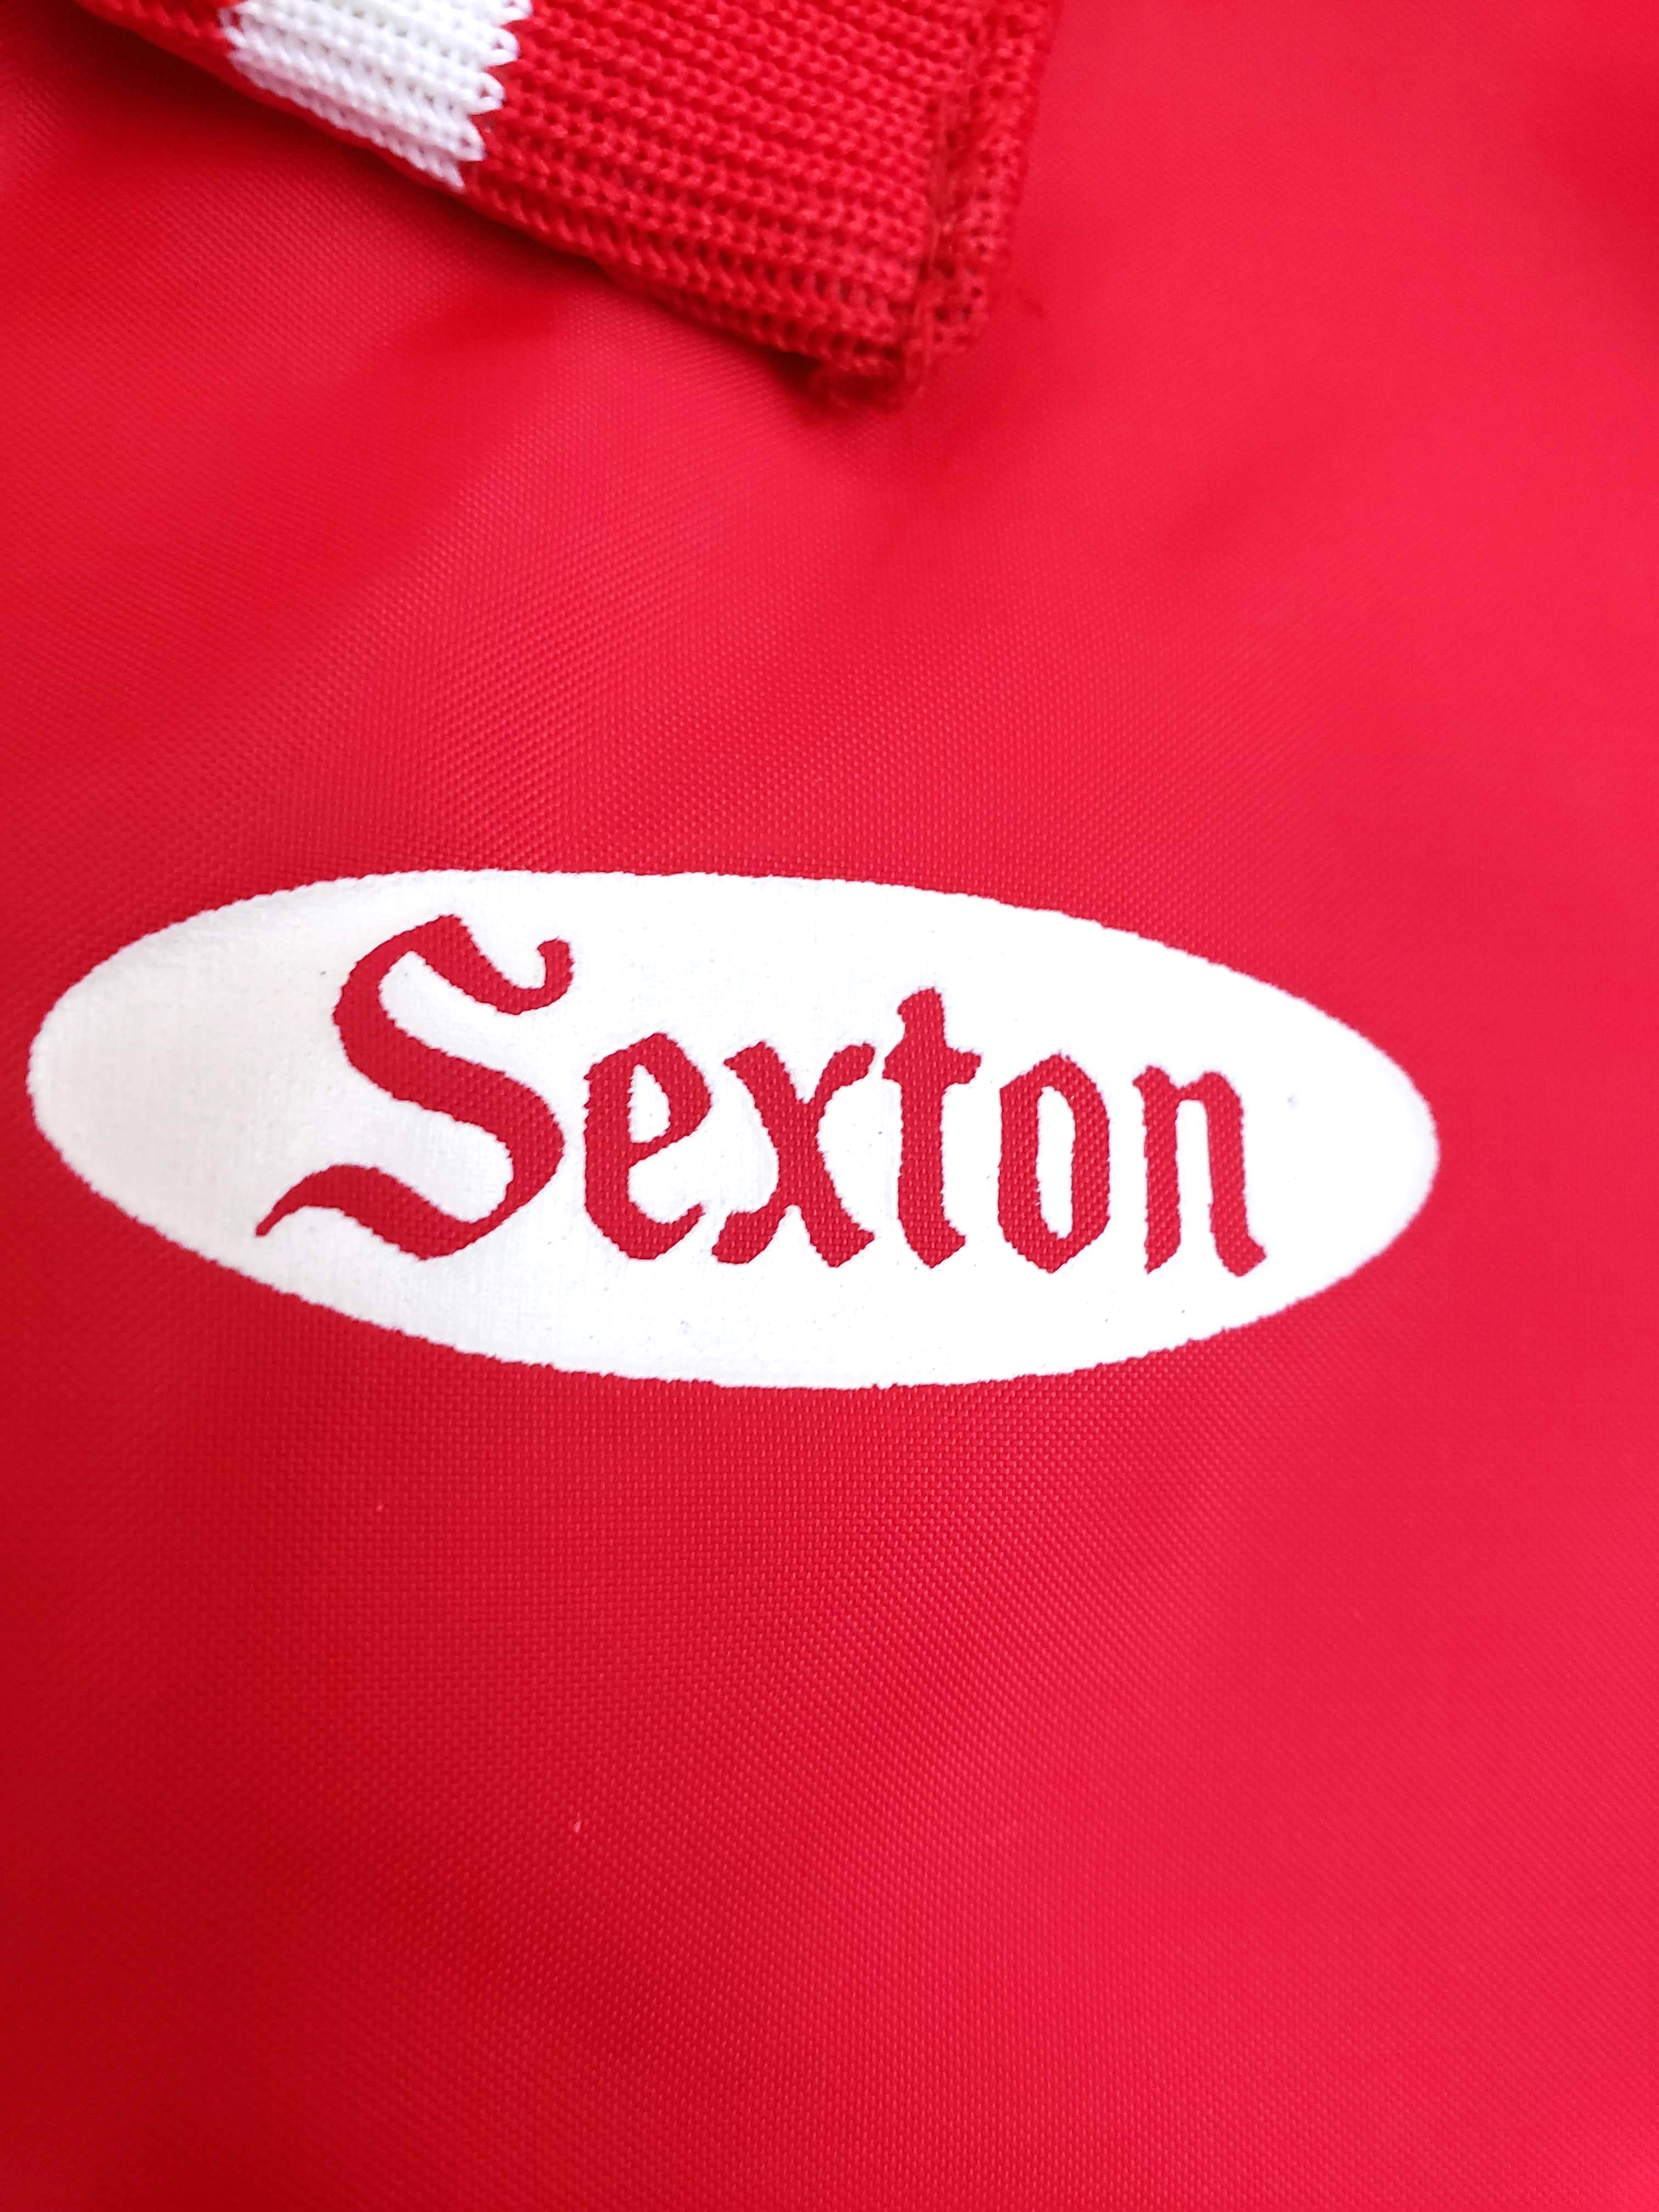 Vintage Sexton 1/4 Zip Wind Bomber Jacket